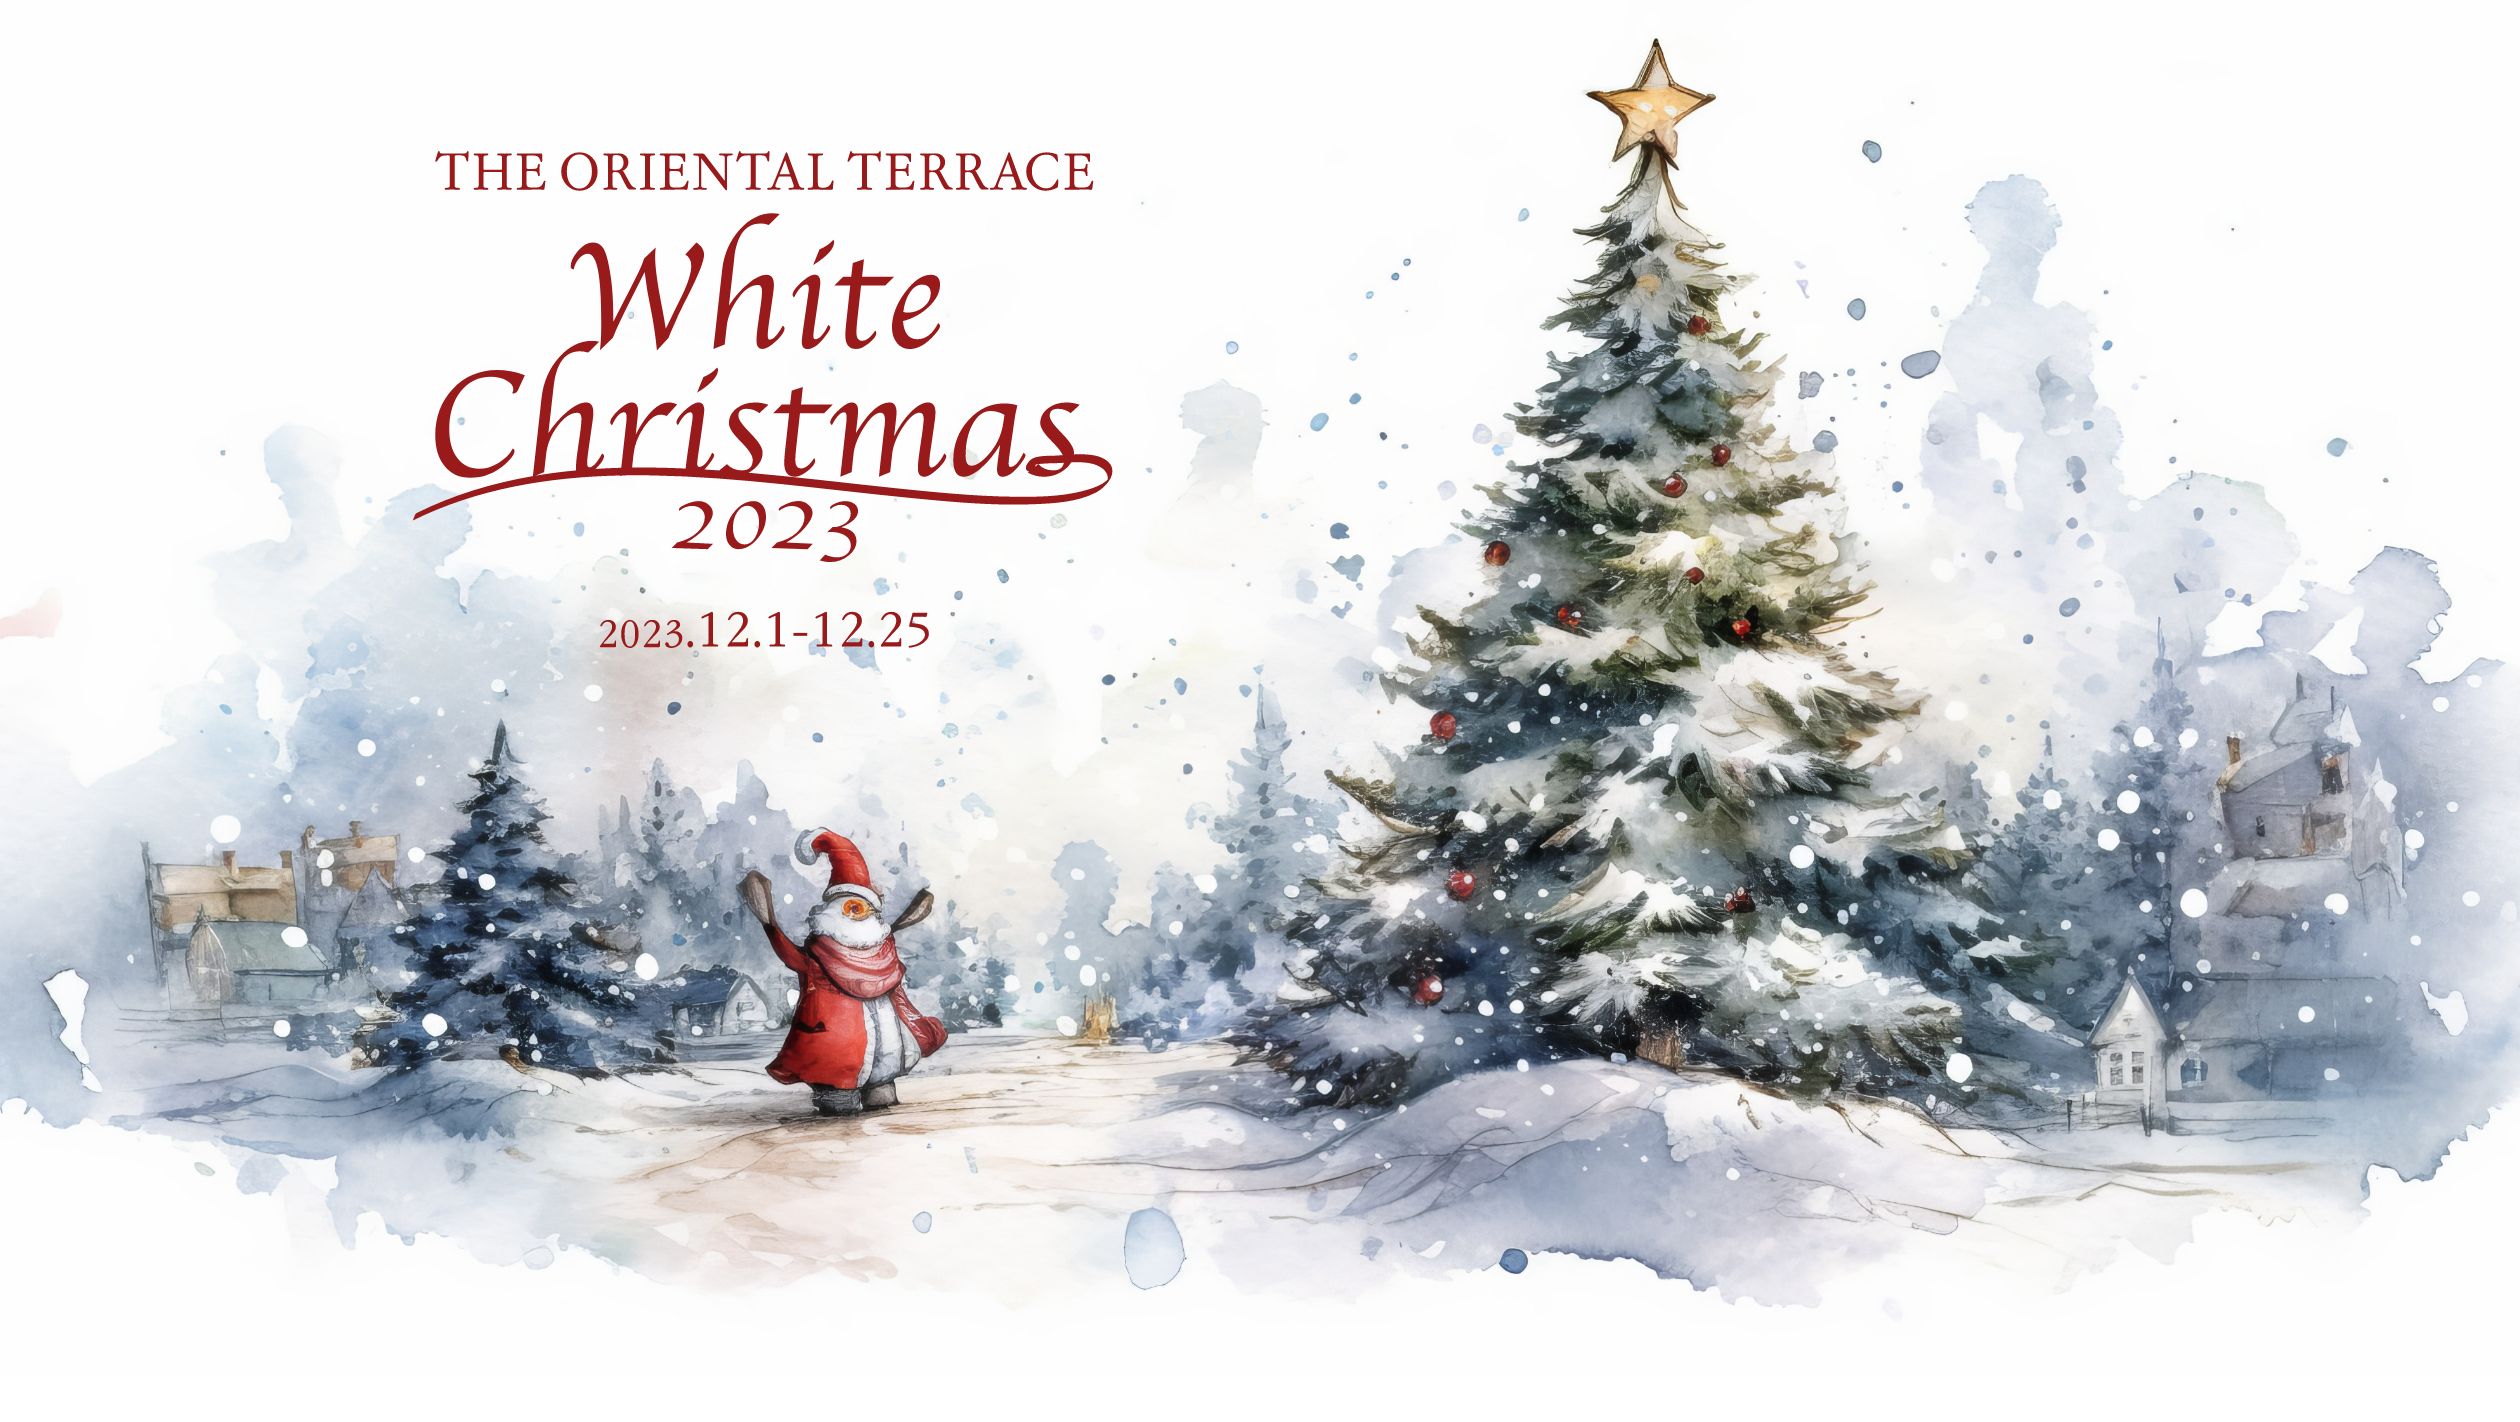 THE ORIENTAL TERRACE CHRISTMAS 2023 2023.12.1 - 12.25